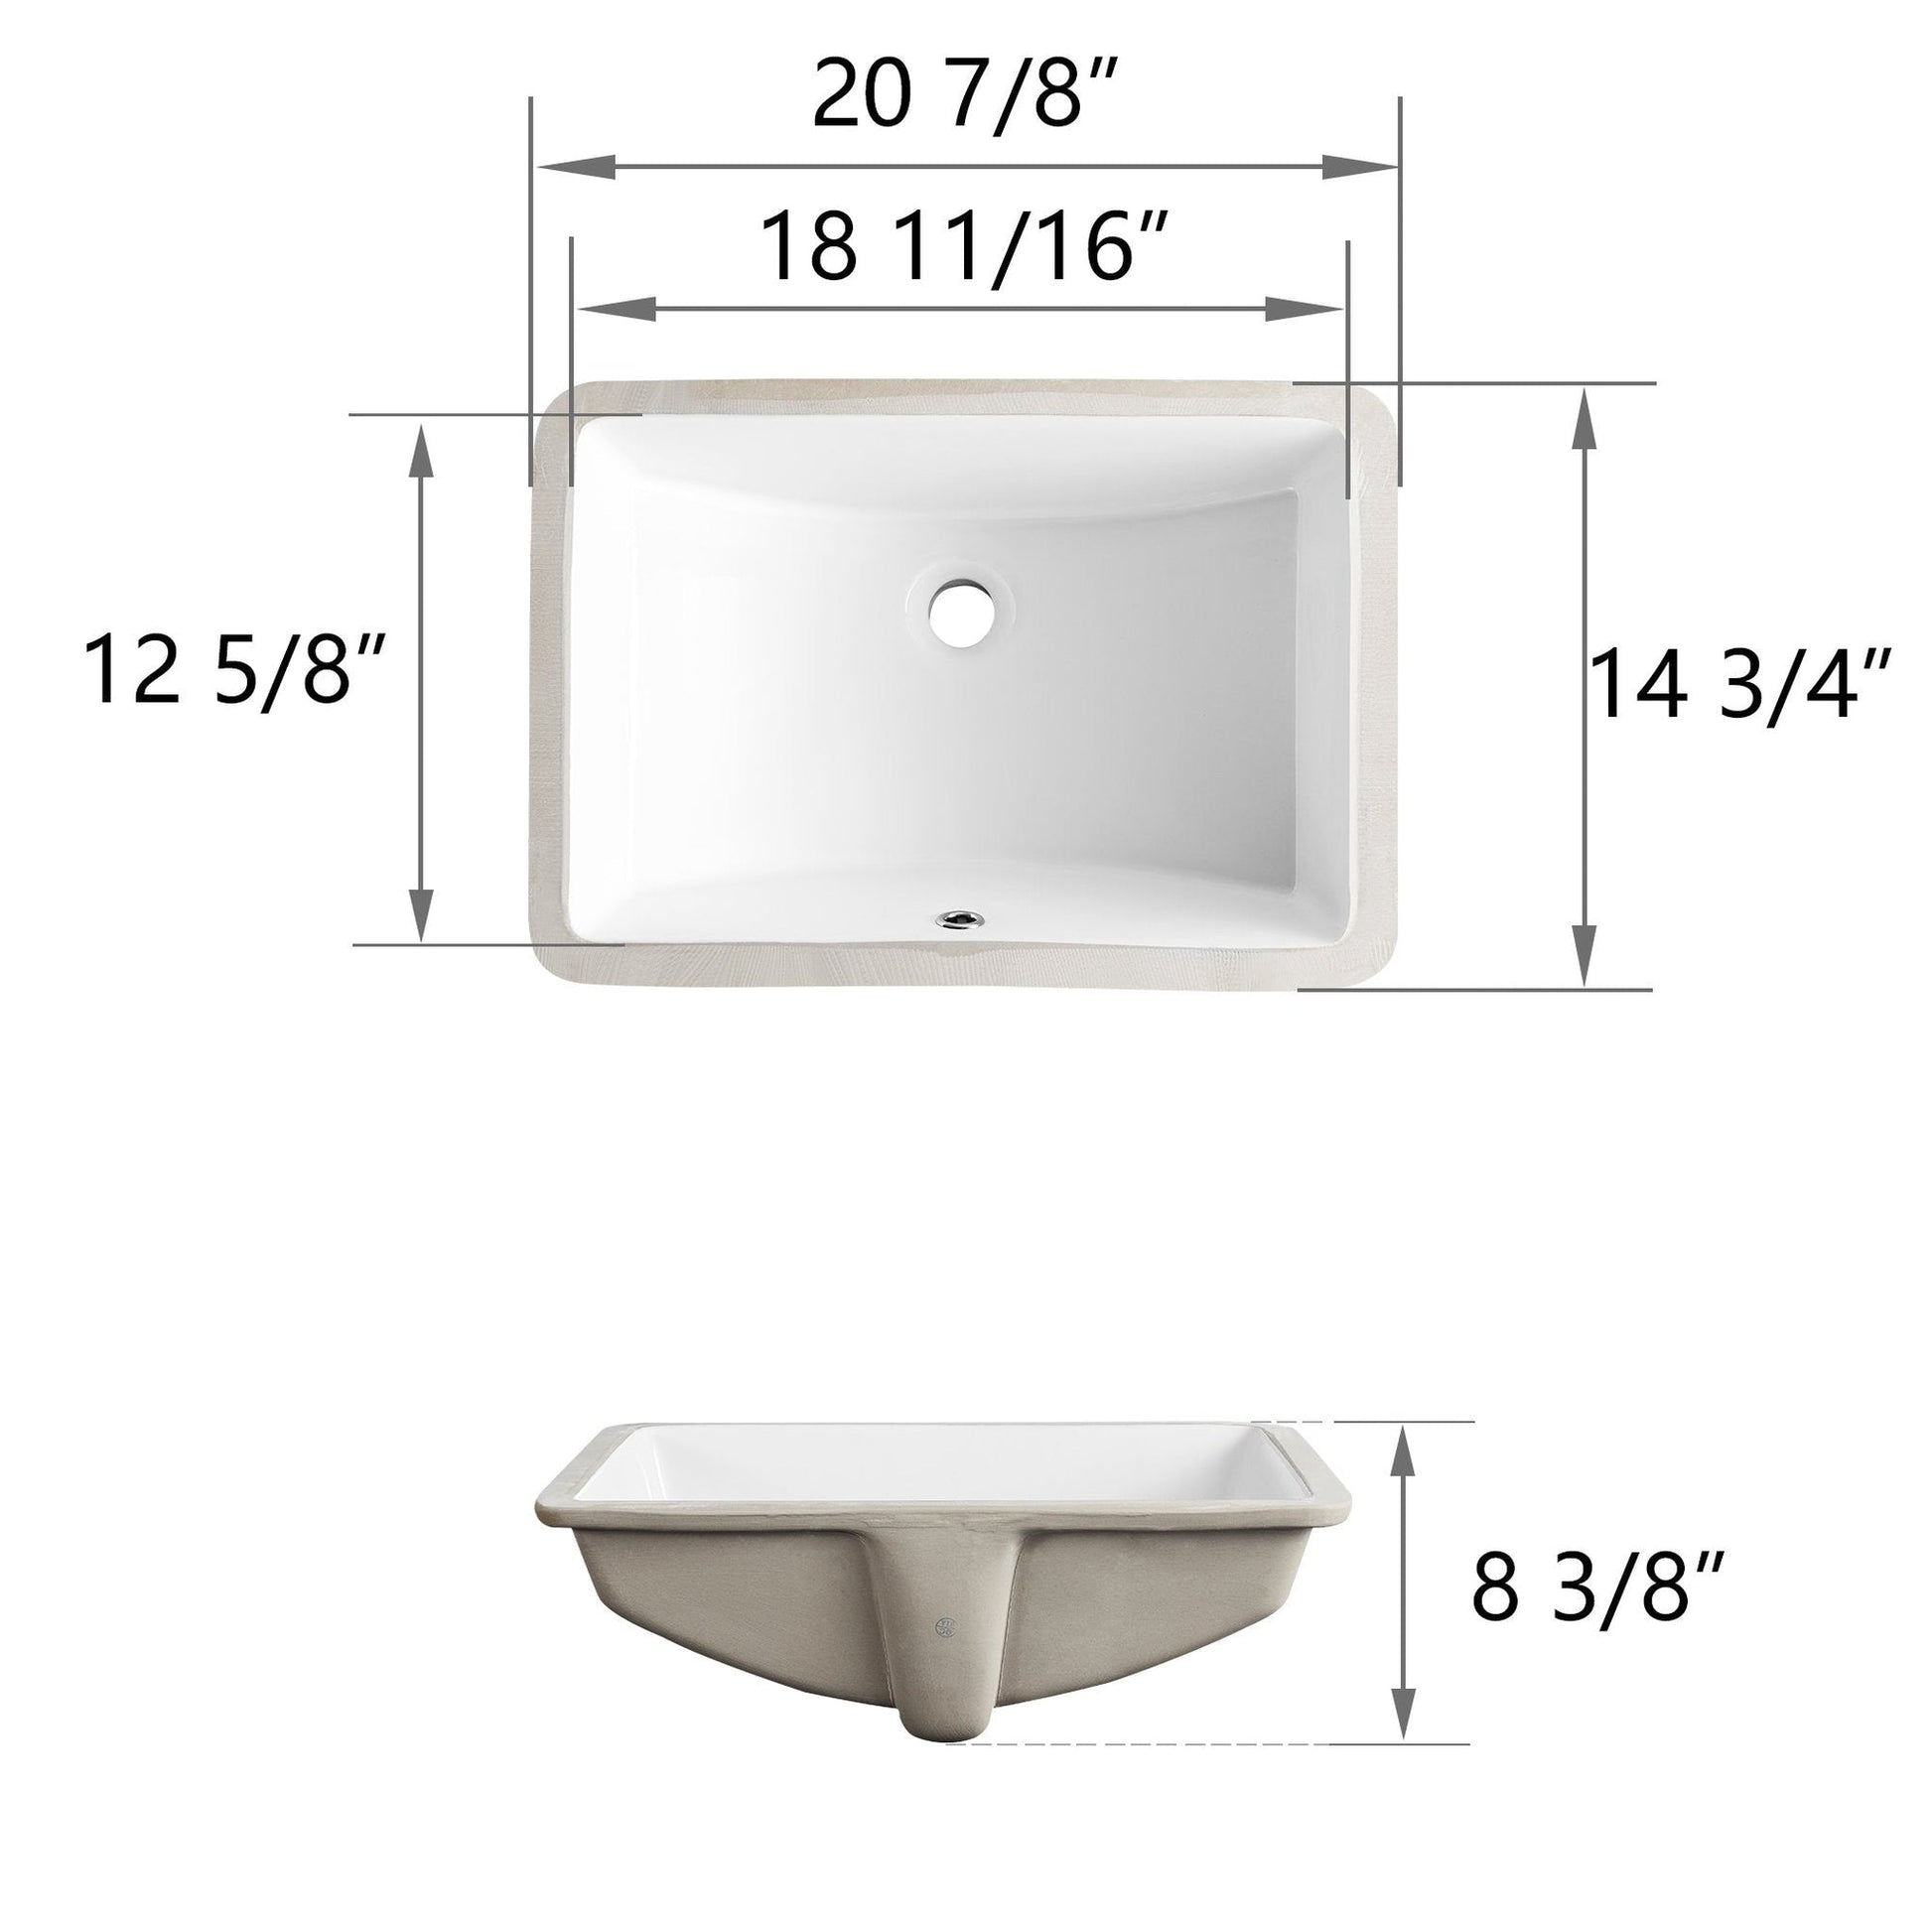 DeerValley Ally 21" x 15" Rectangular White Undermount Bathroom Sink With Overflow Hole